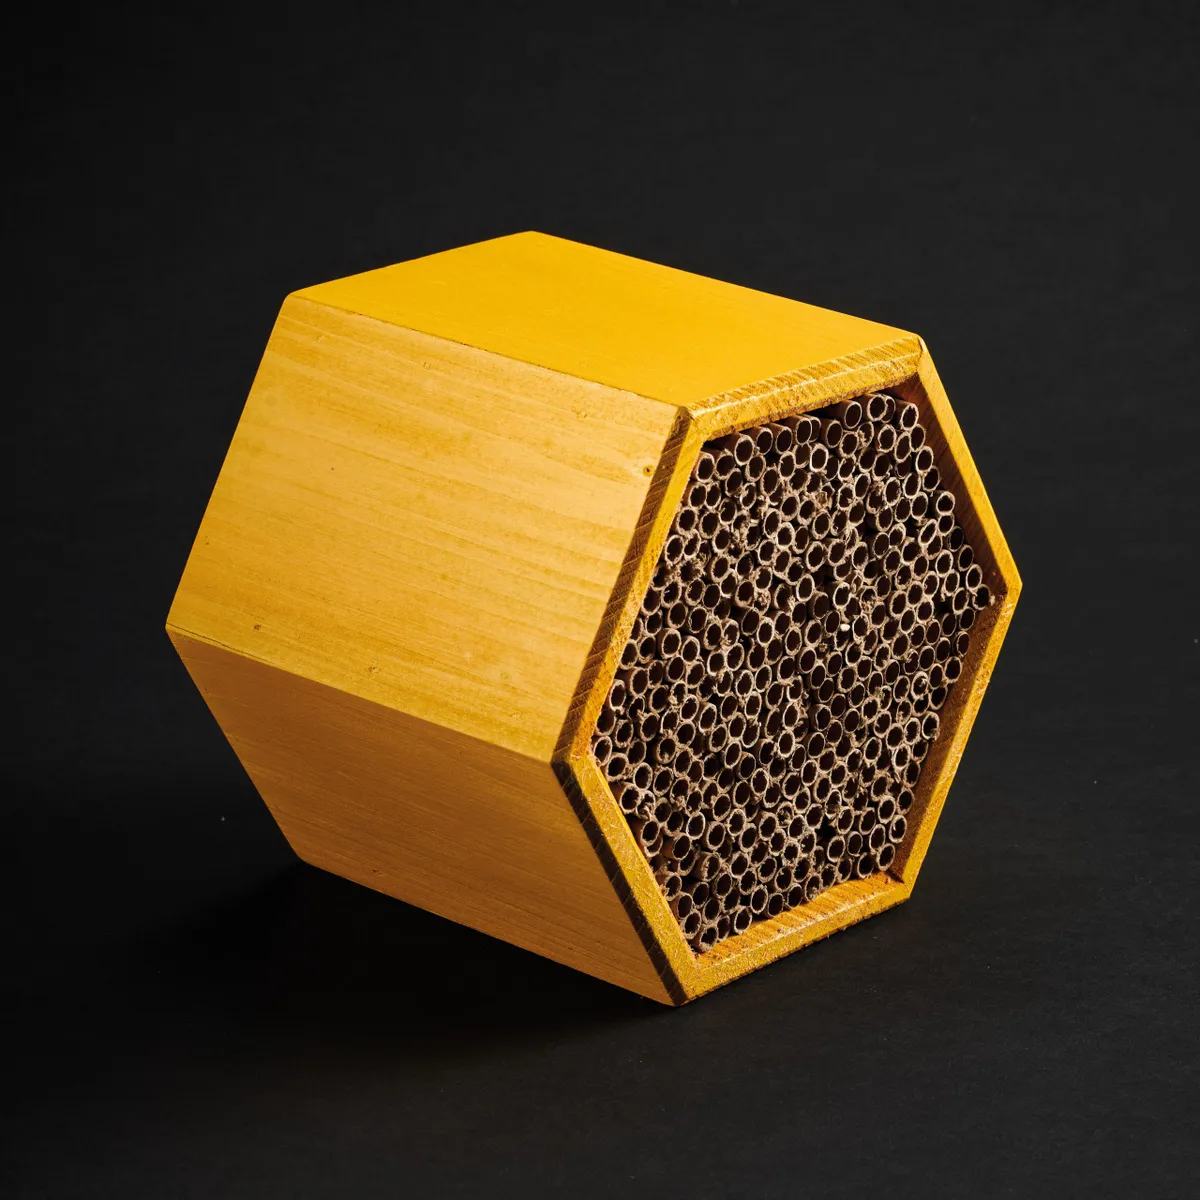 Honeycomb bee house